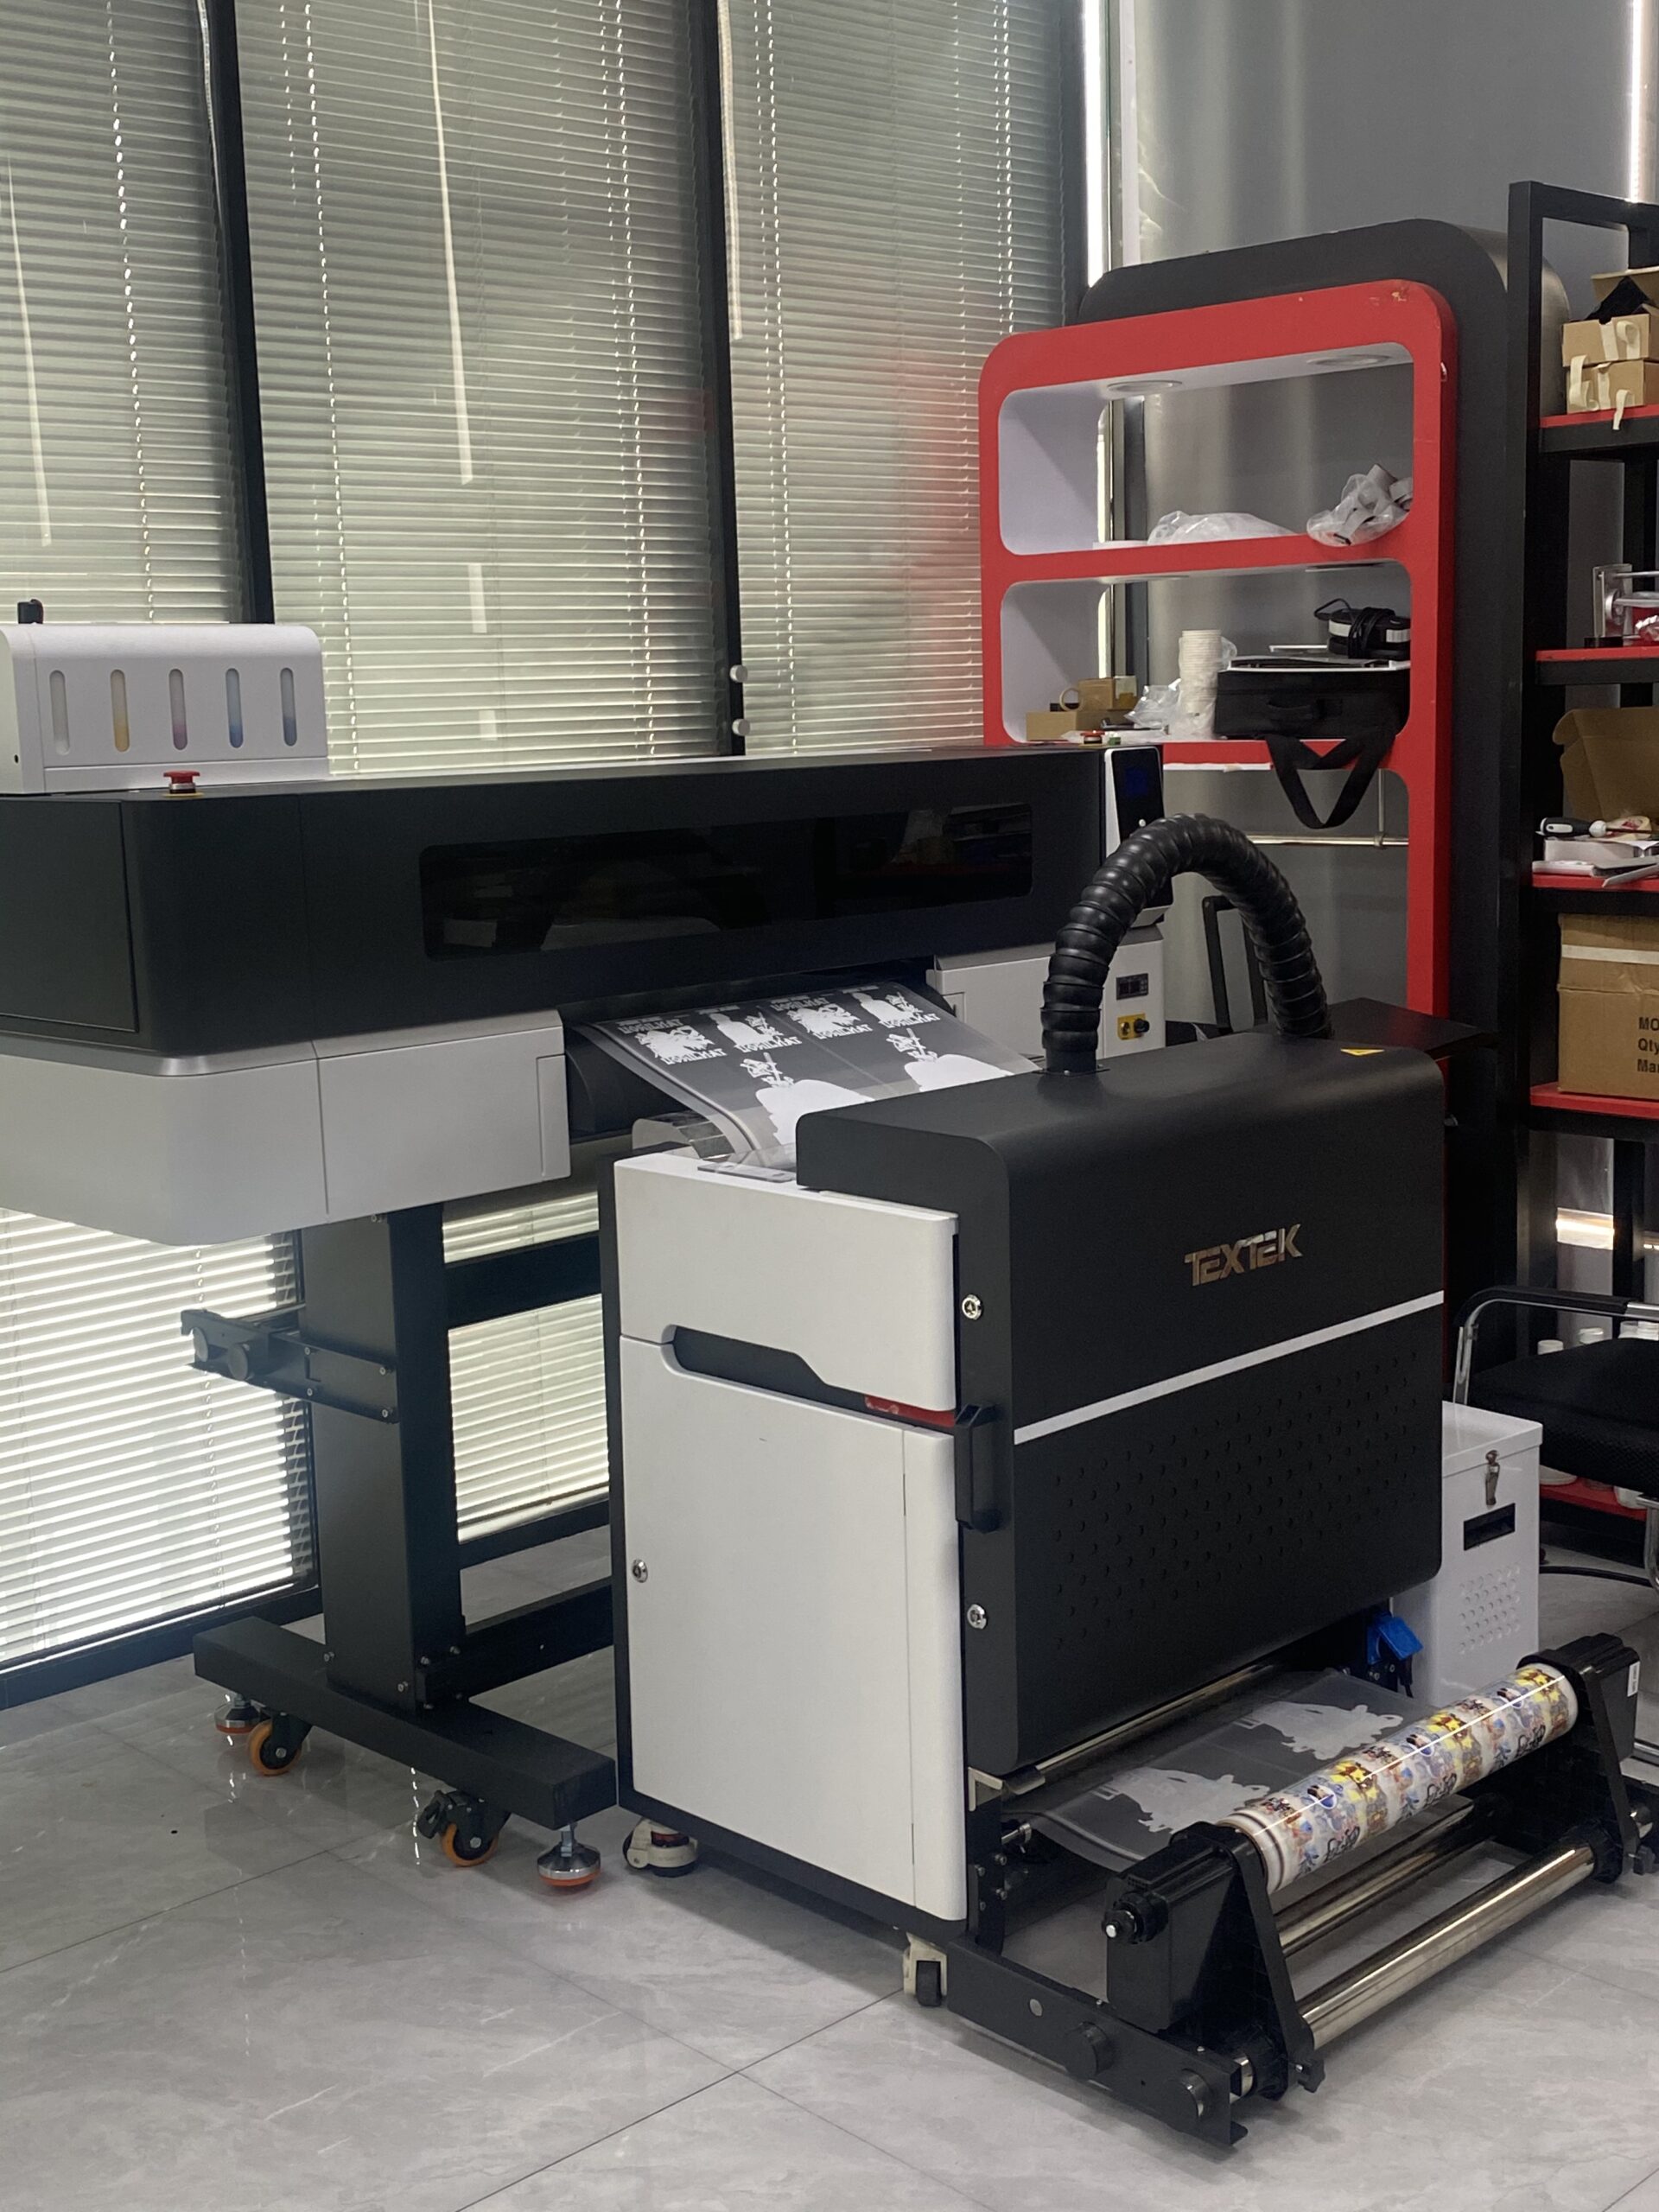 Hot Sale AGP 24inch / 60cm dtf printer i3200 printheads for T shirt film printing